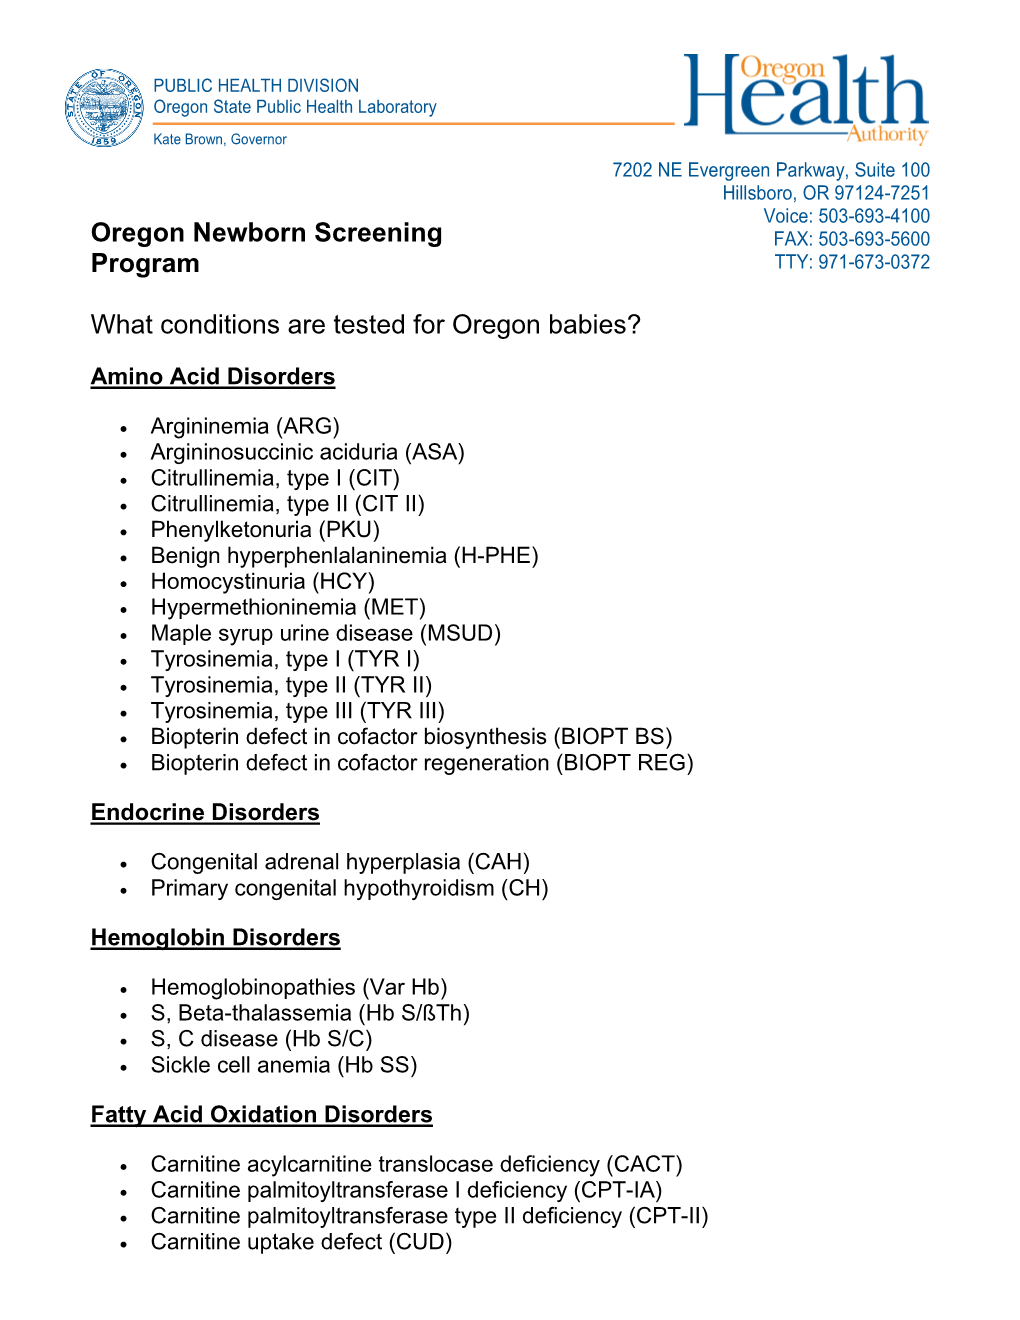 List of Newborn Screening Conditions